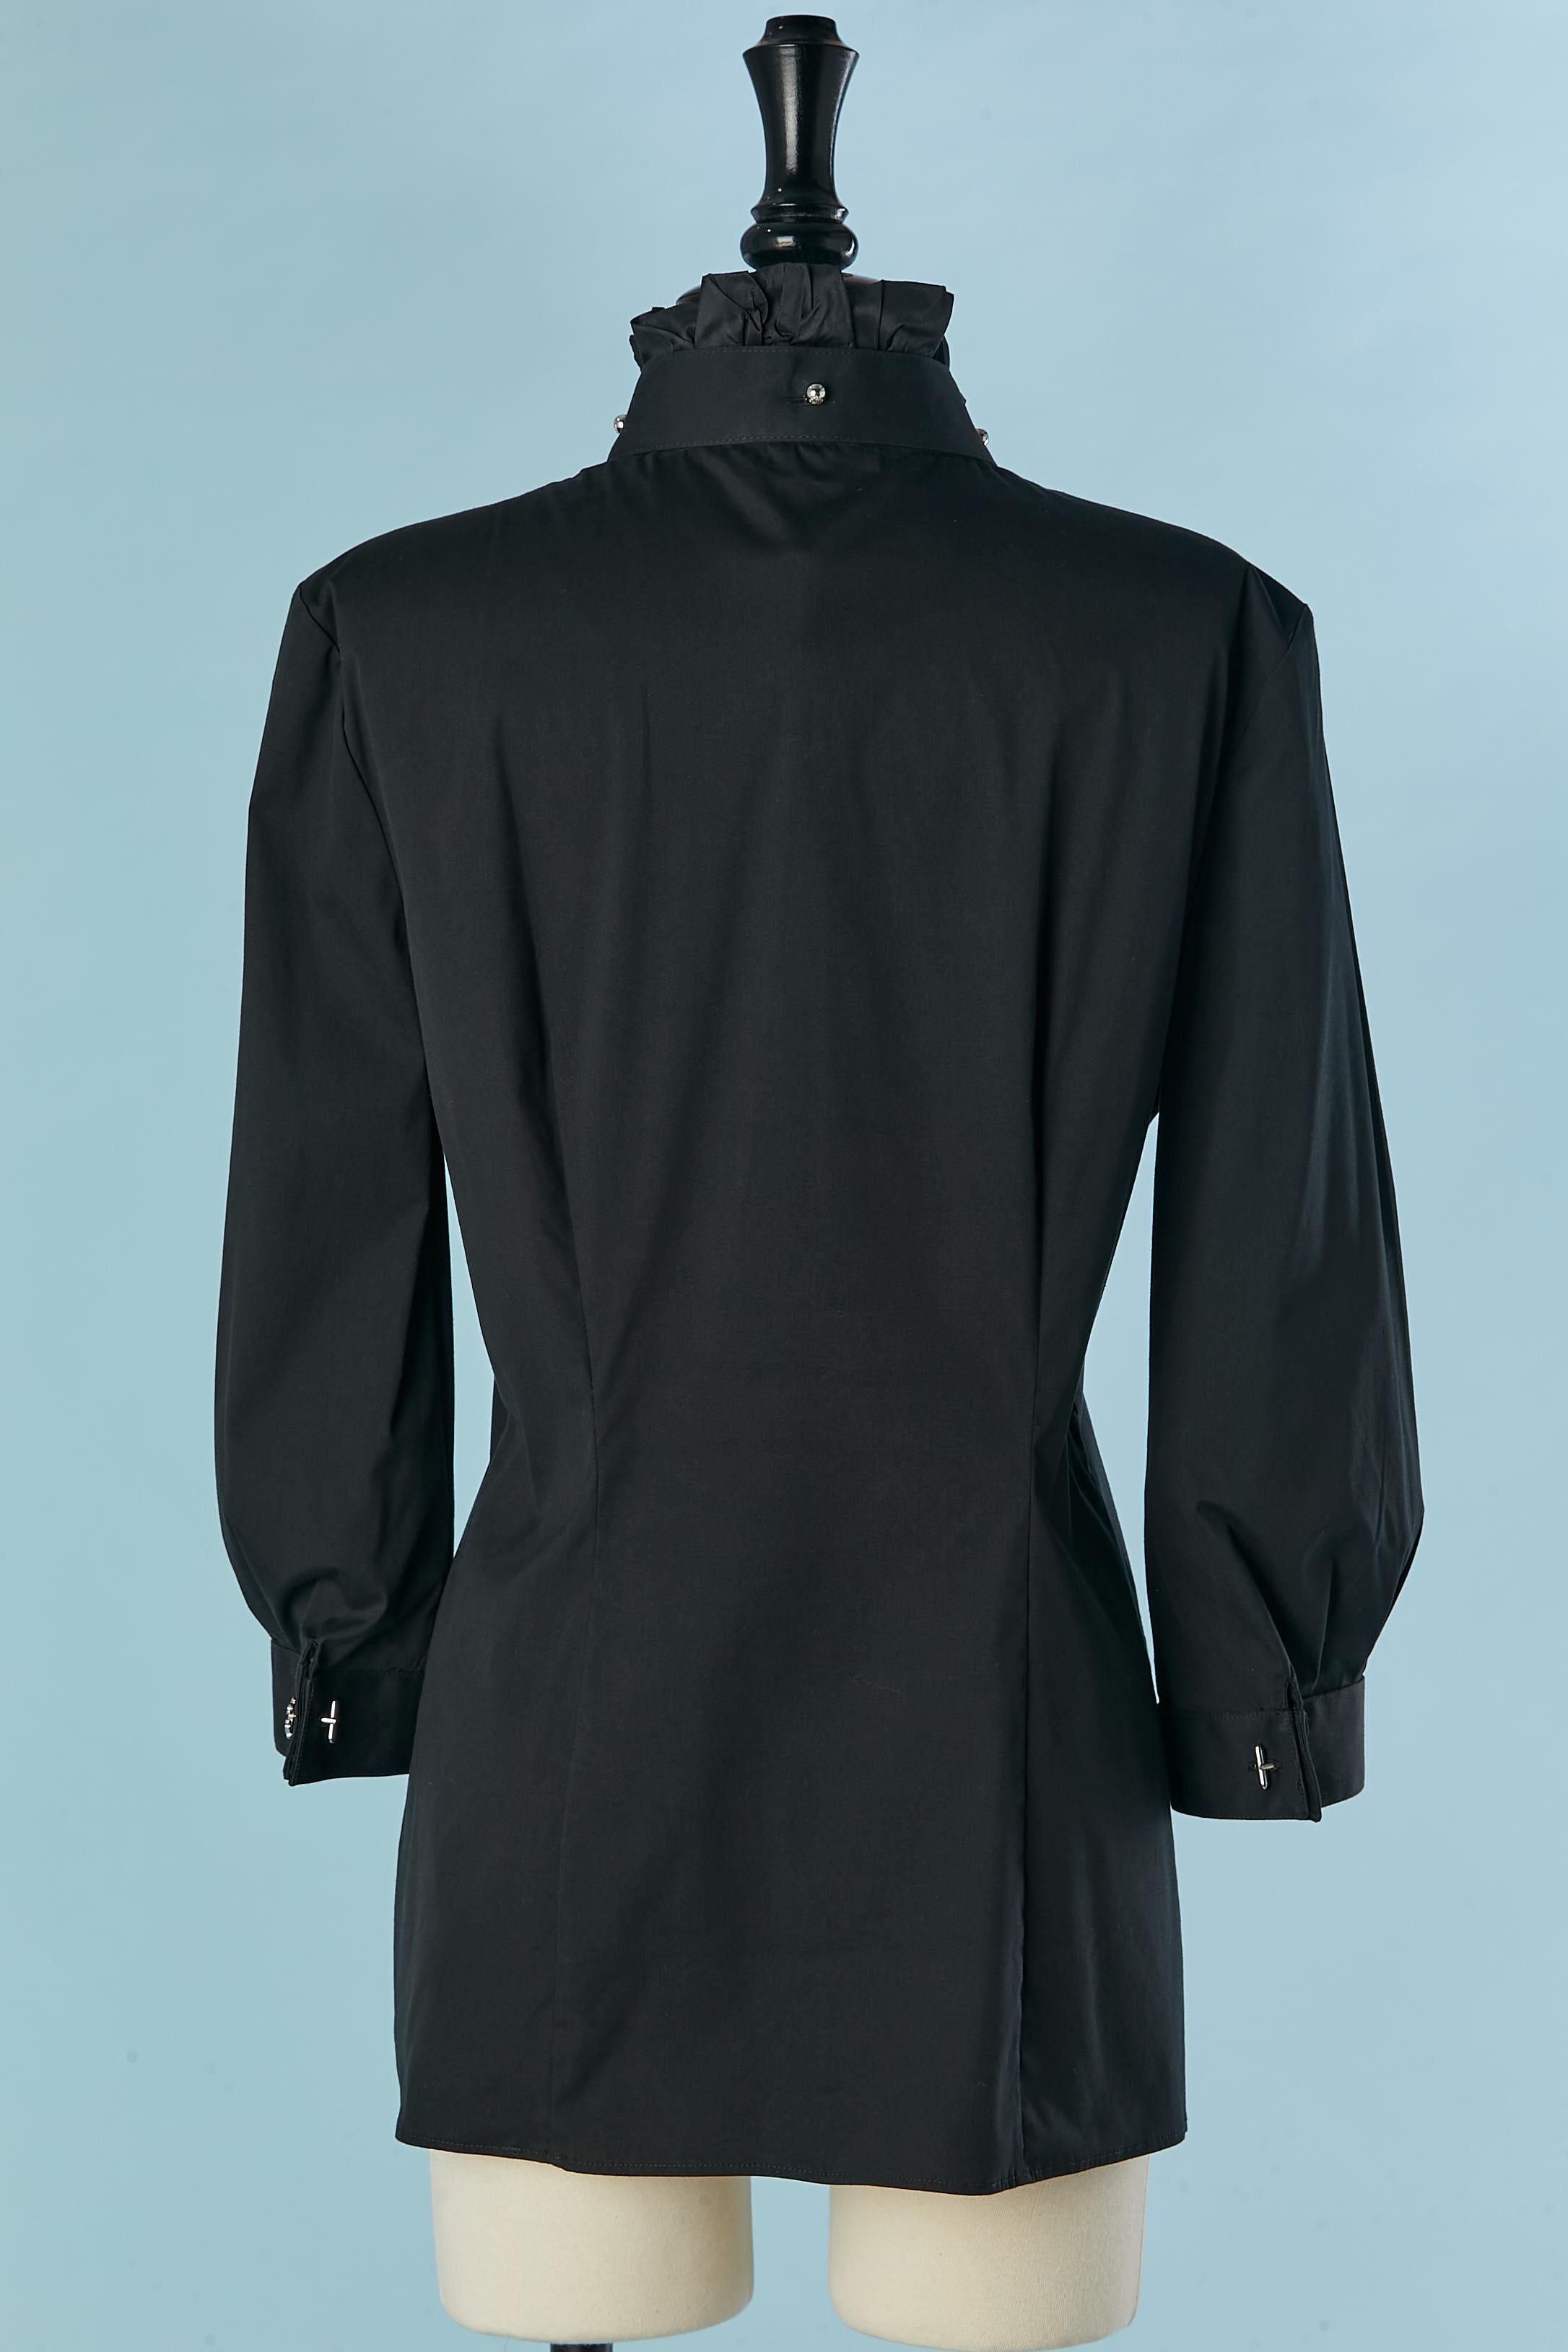 Black shirt with silk taffetas ruffles edge and silver buttons Roberto Cavalli  For Sale 2